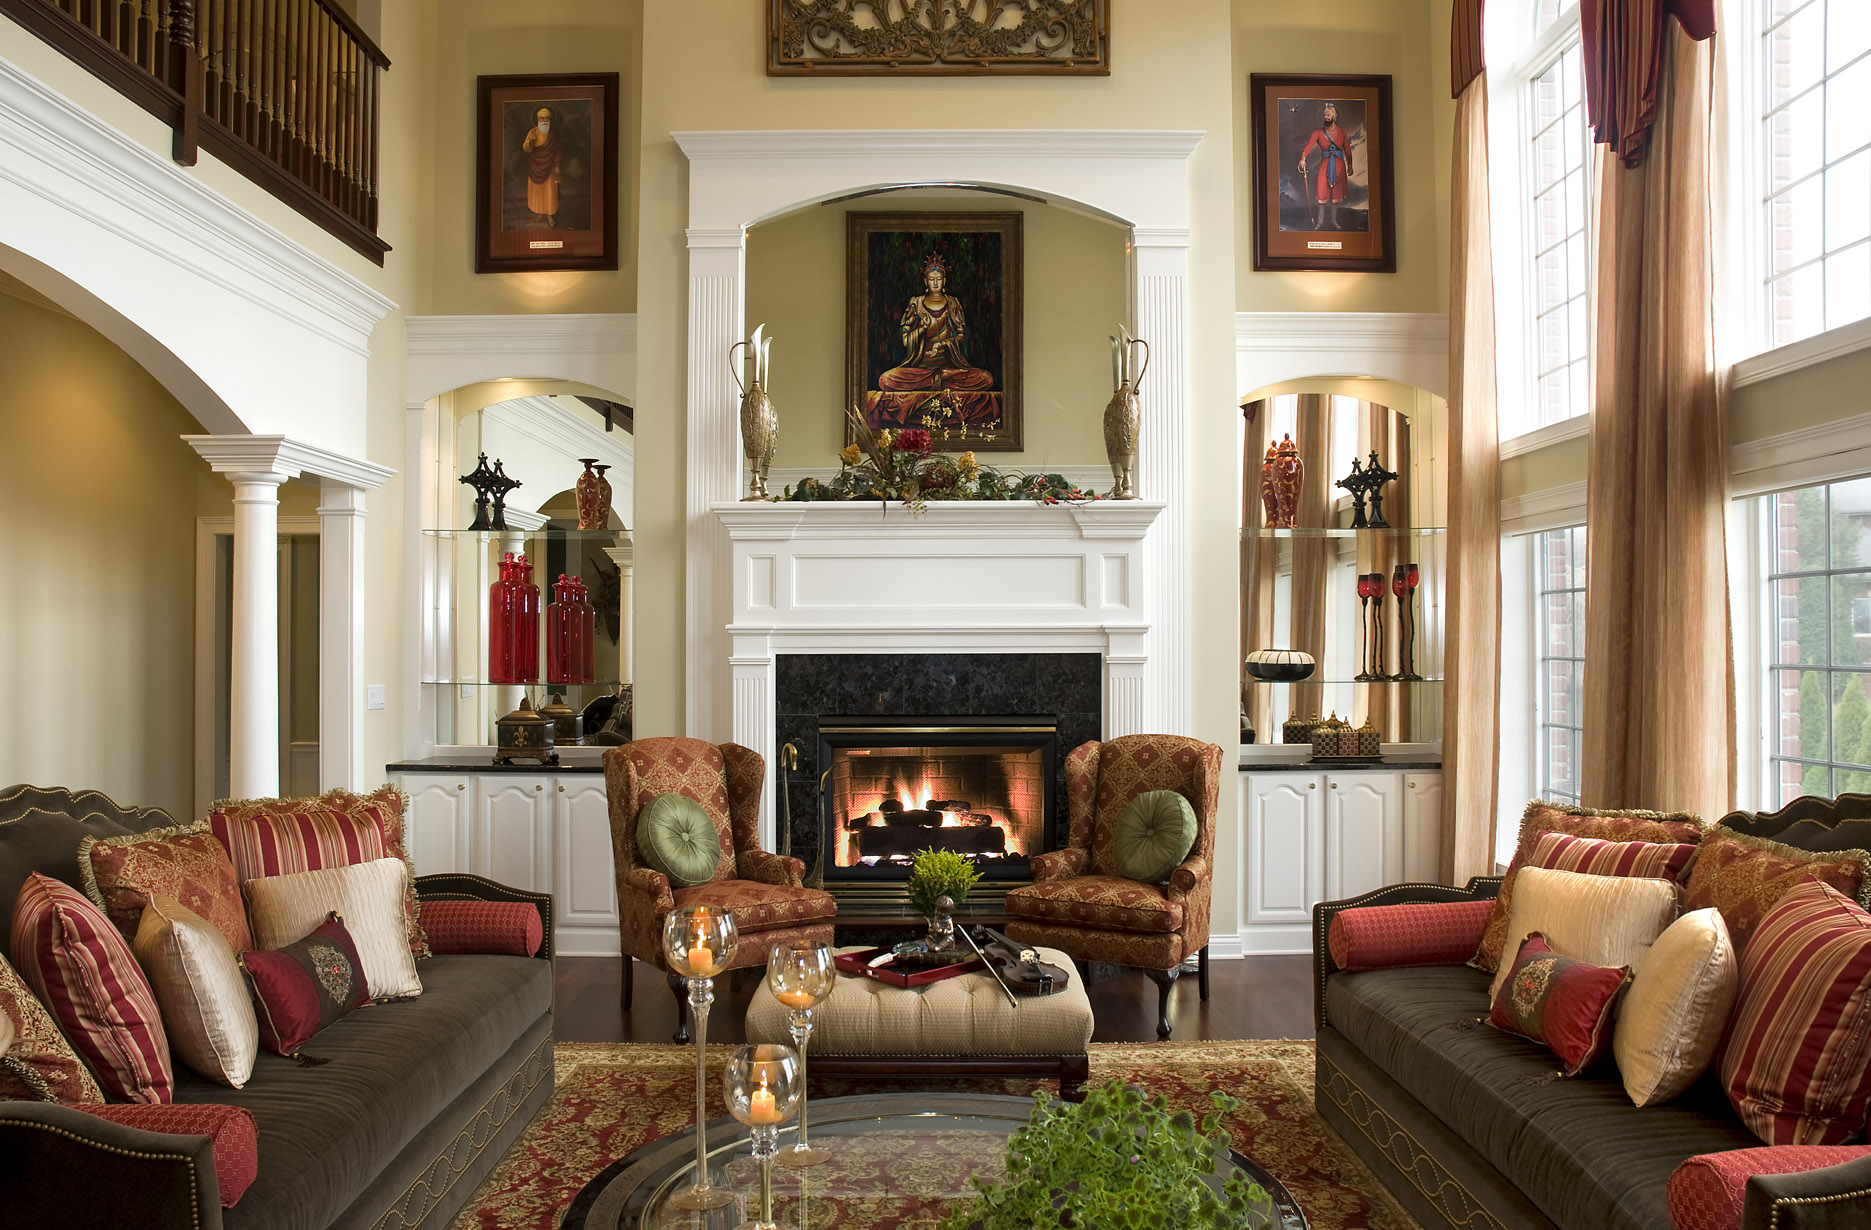 7 Steps to a BEAUTIFUL Living Room! | Northside Decorating Den's Blog